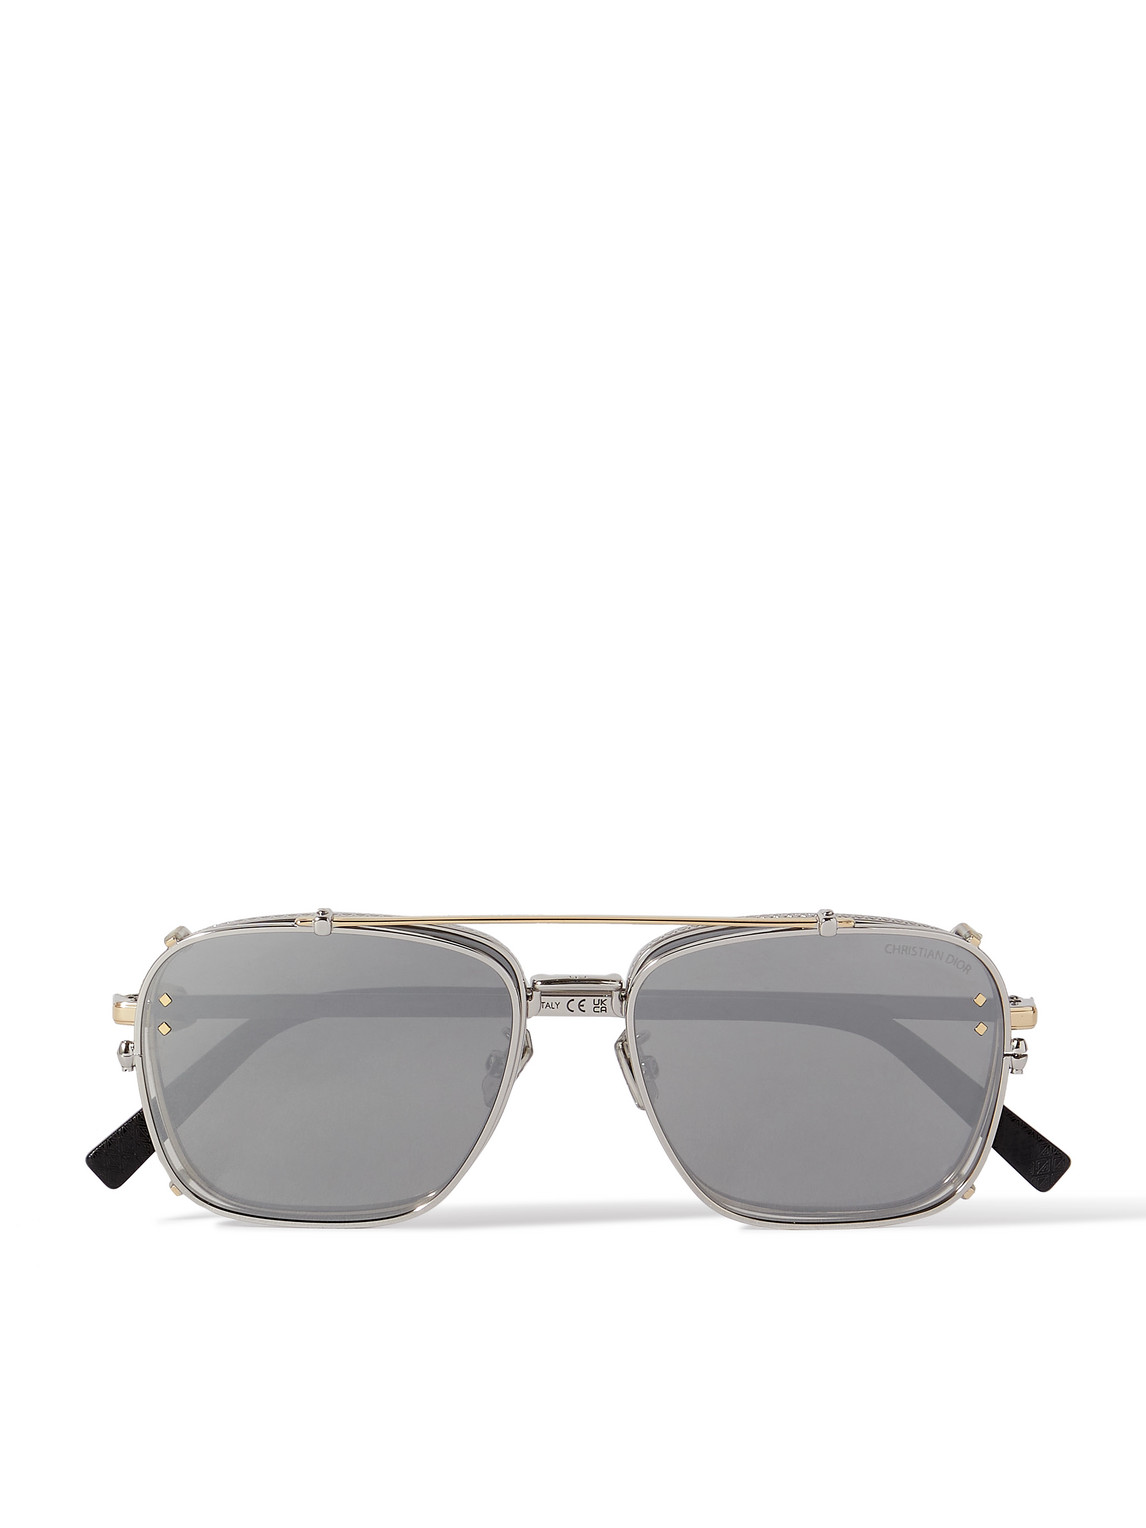 Dior Eyewear - CD Diamond S4U Aviator-Style Silver-Tone Sunglasses - Men - Silver von Dior Eyewear